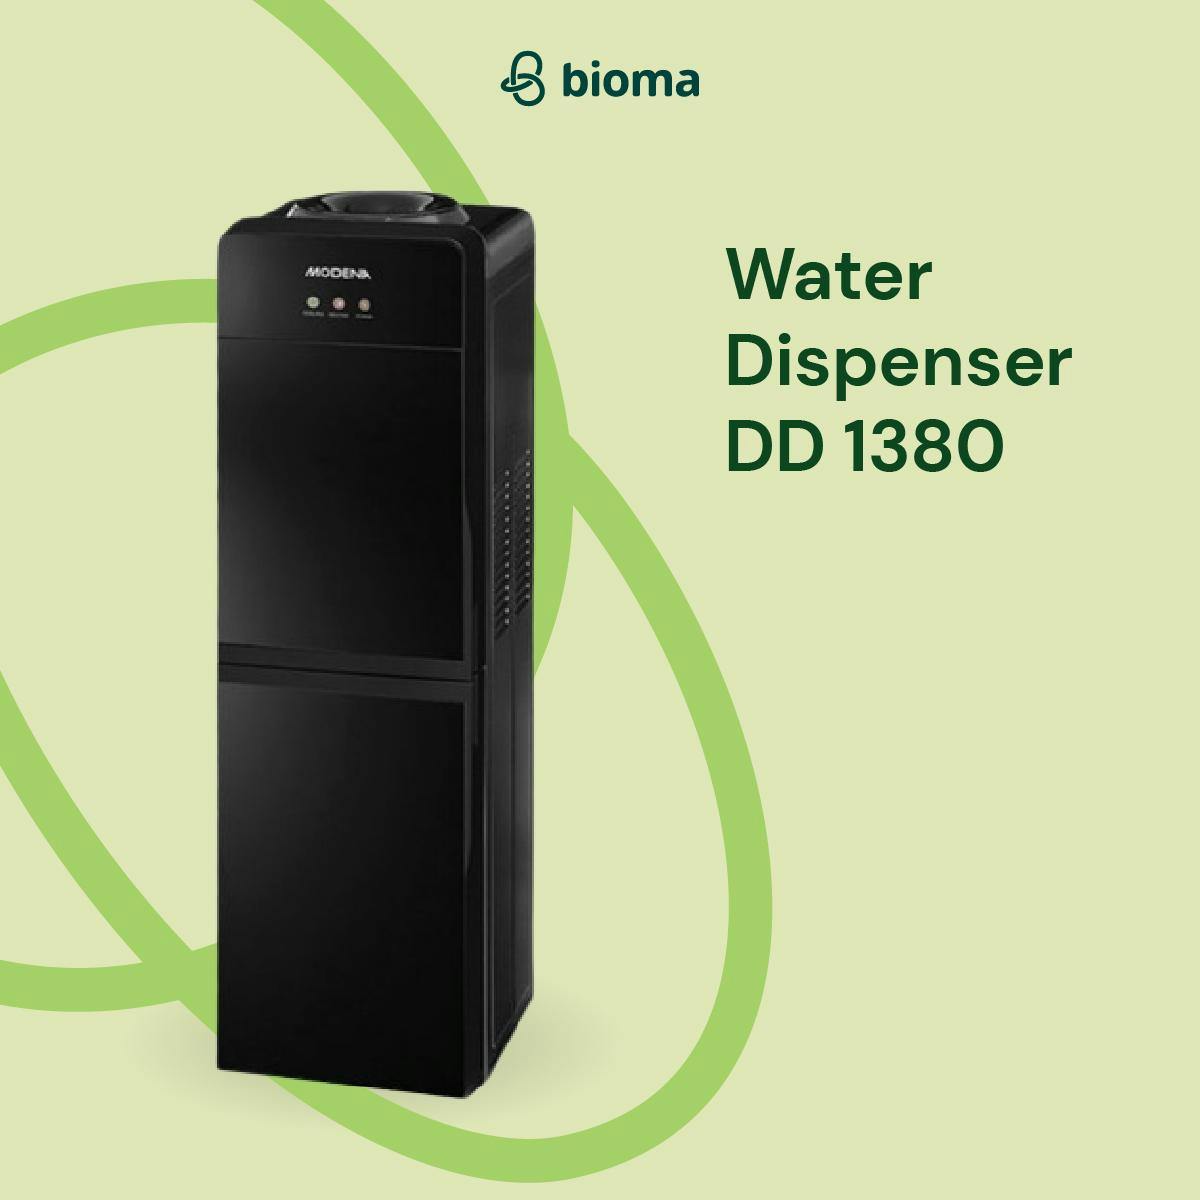 Water Dispenser DD 1380